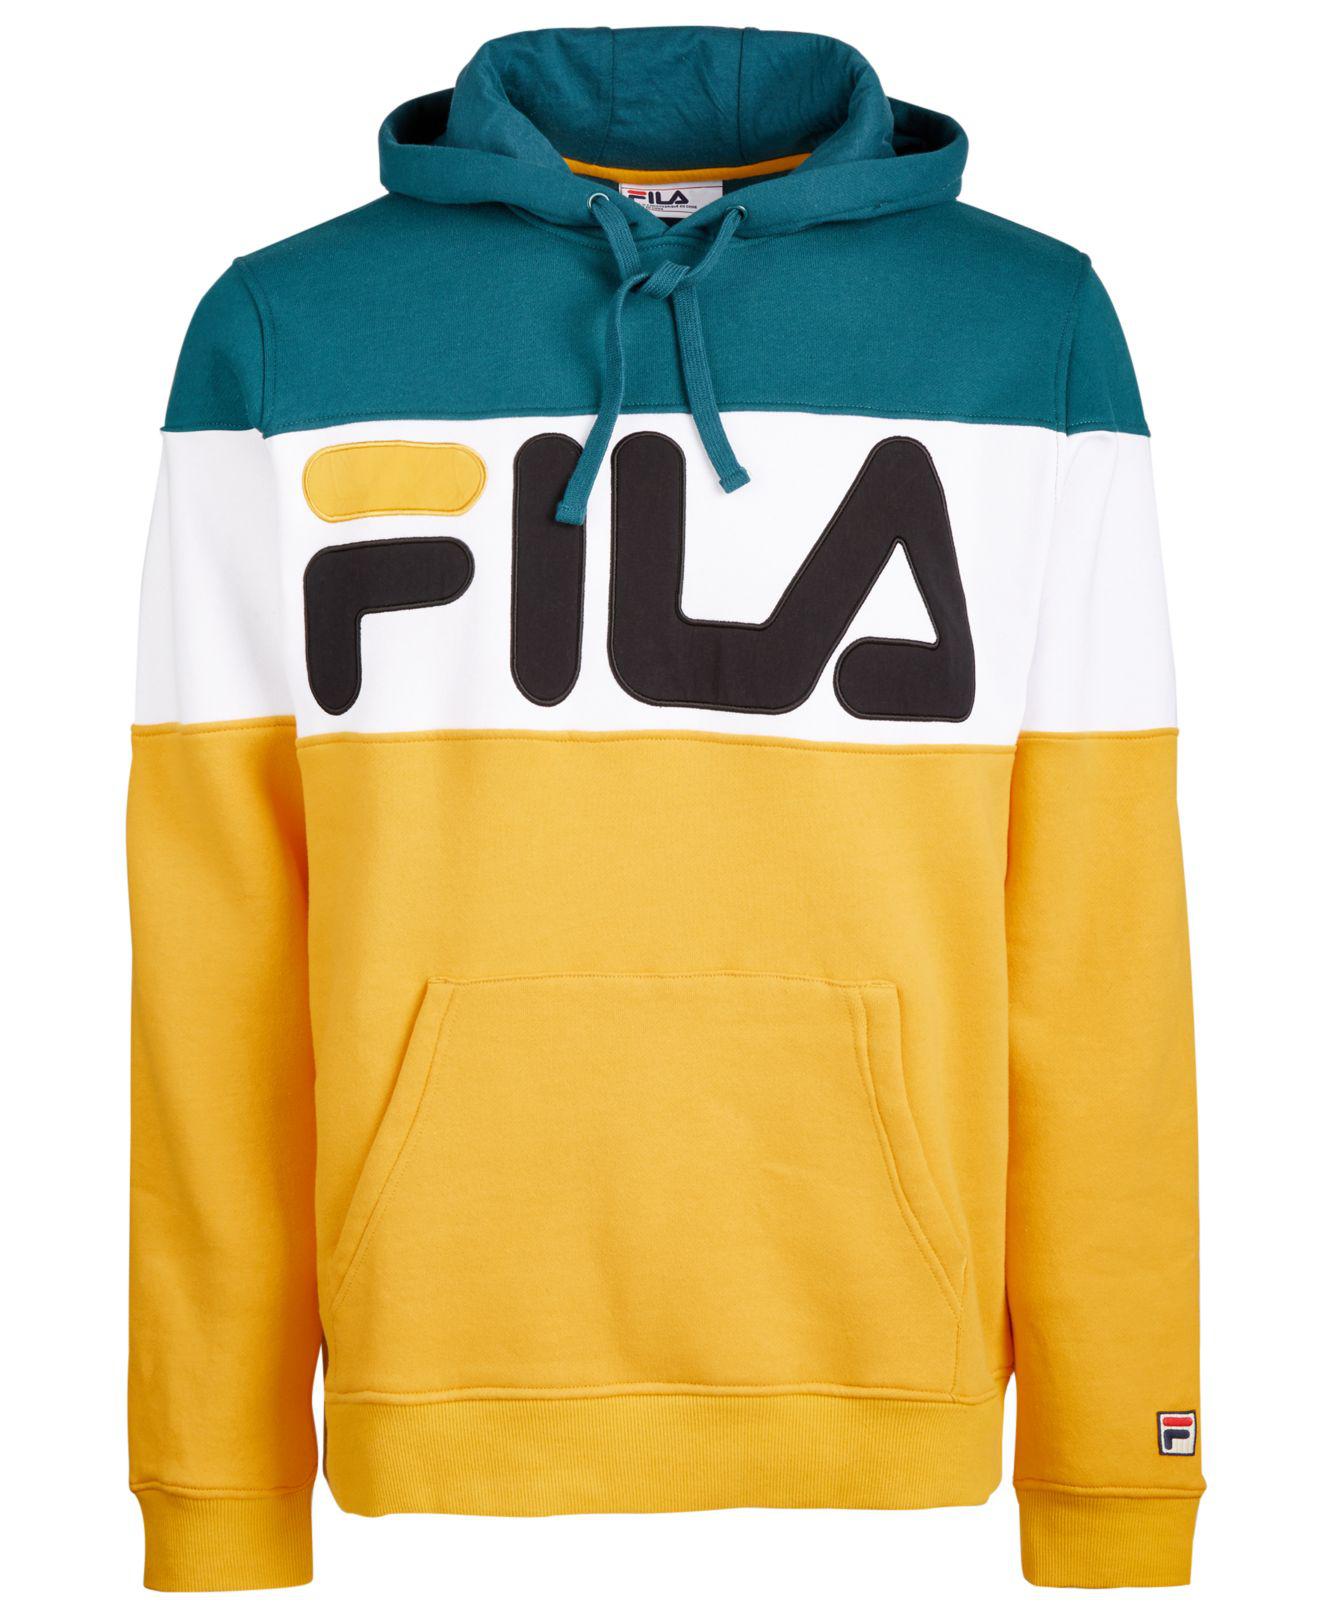 Buy > fila flamino hoodie > in stock